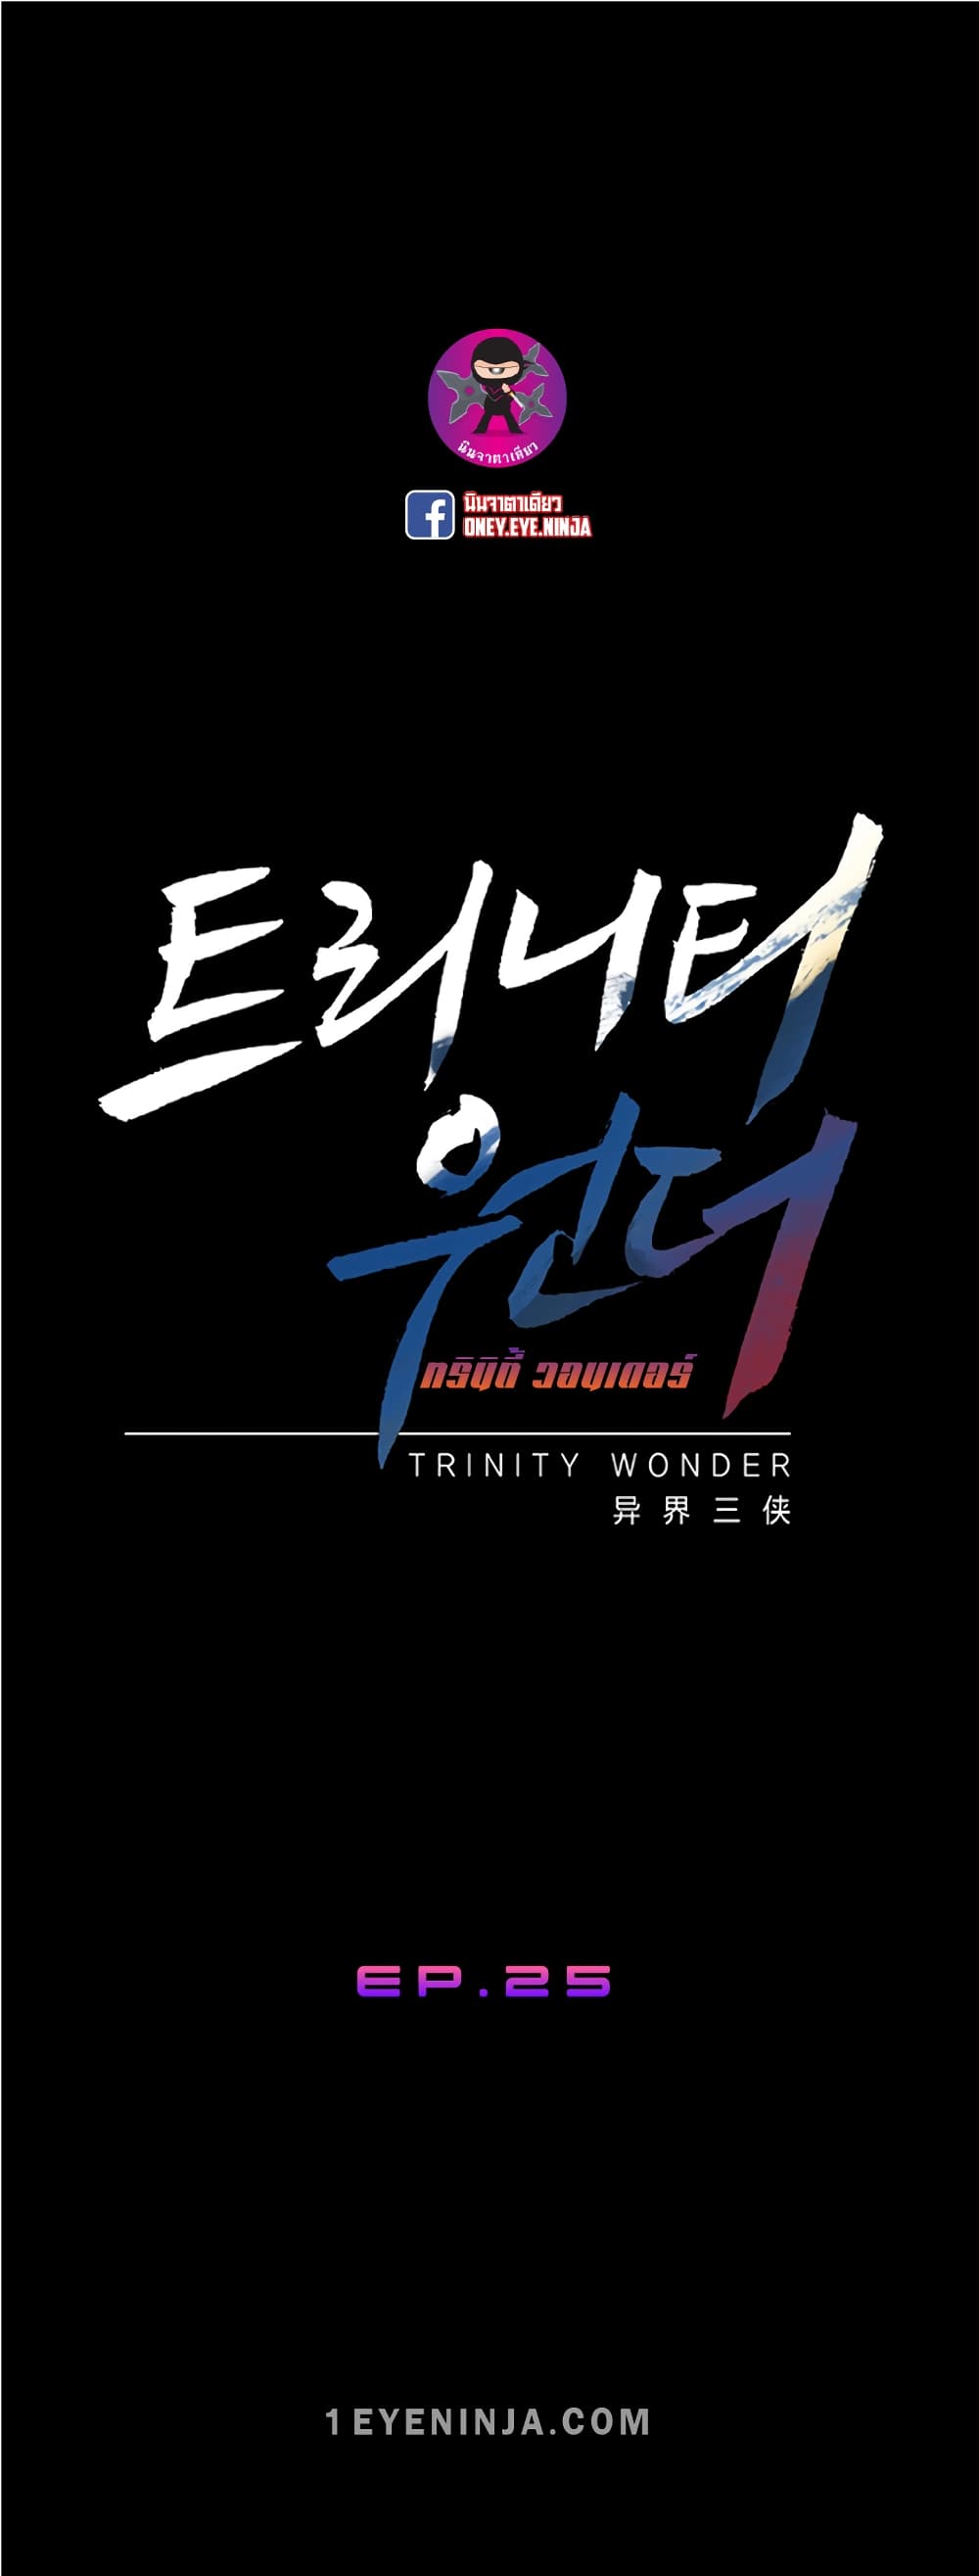 Trinity Wonder 25 (2)